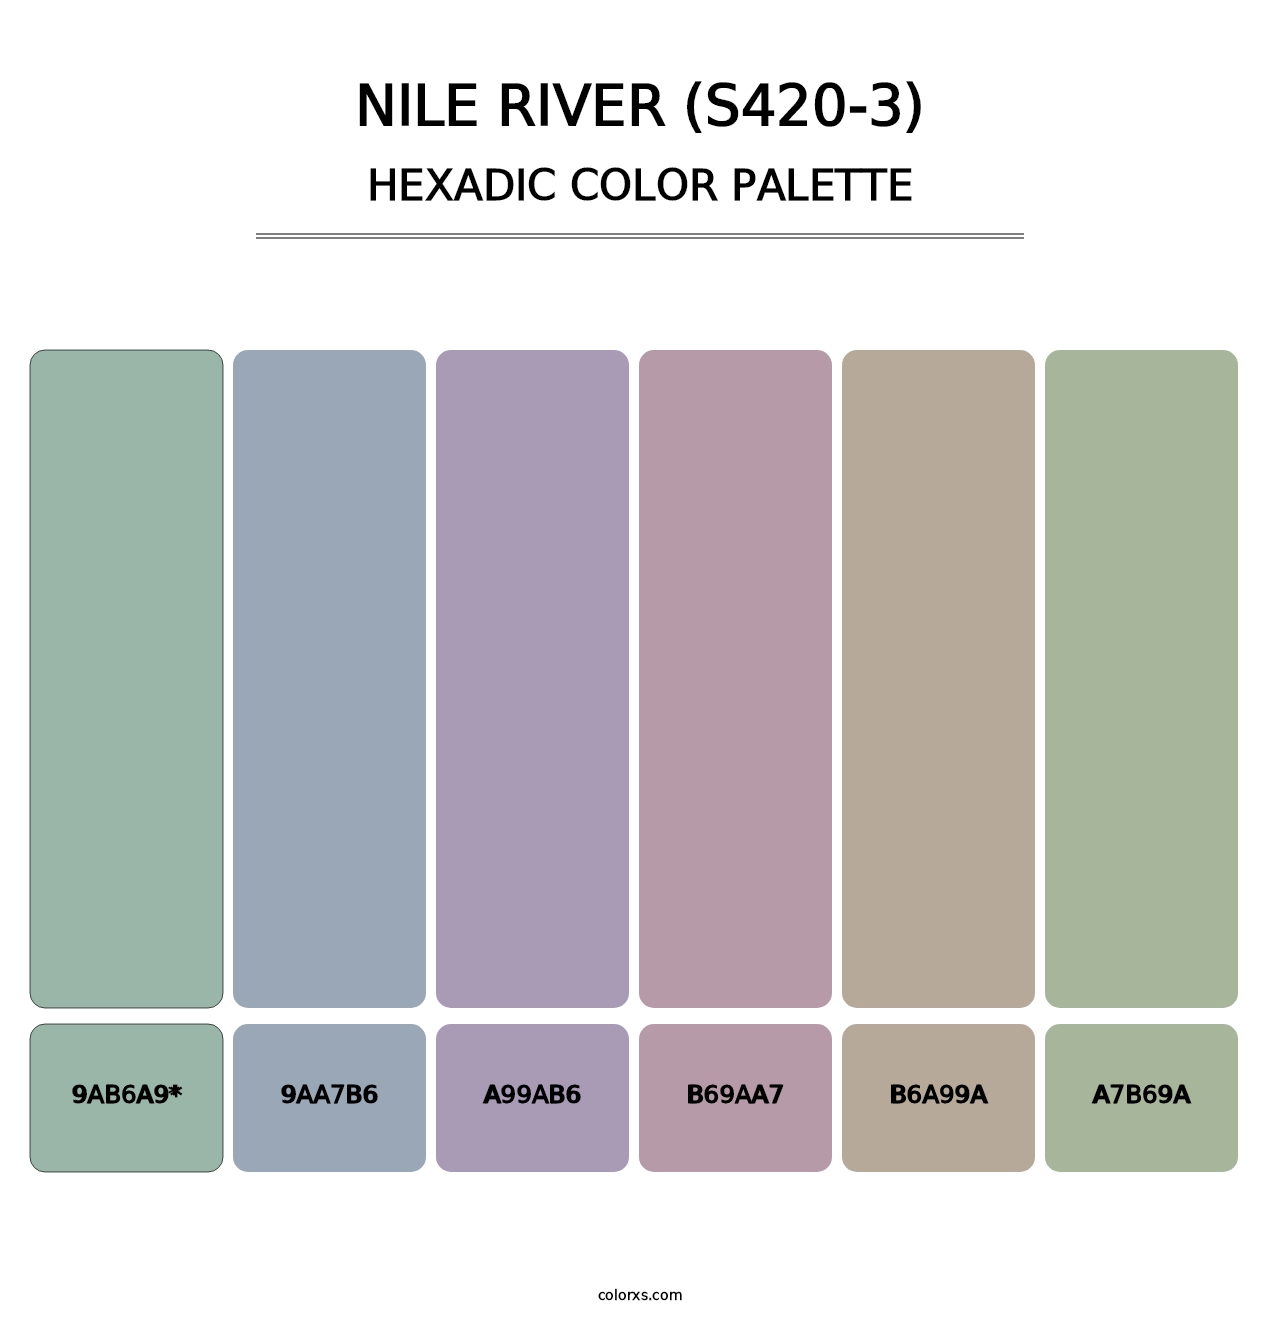 Nile River (S420-3) - Hexadic Color Palette